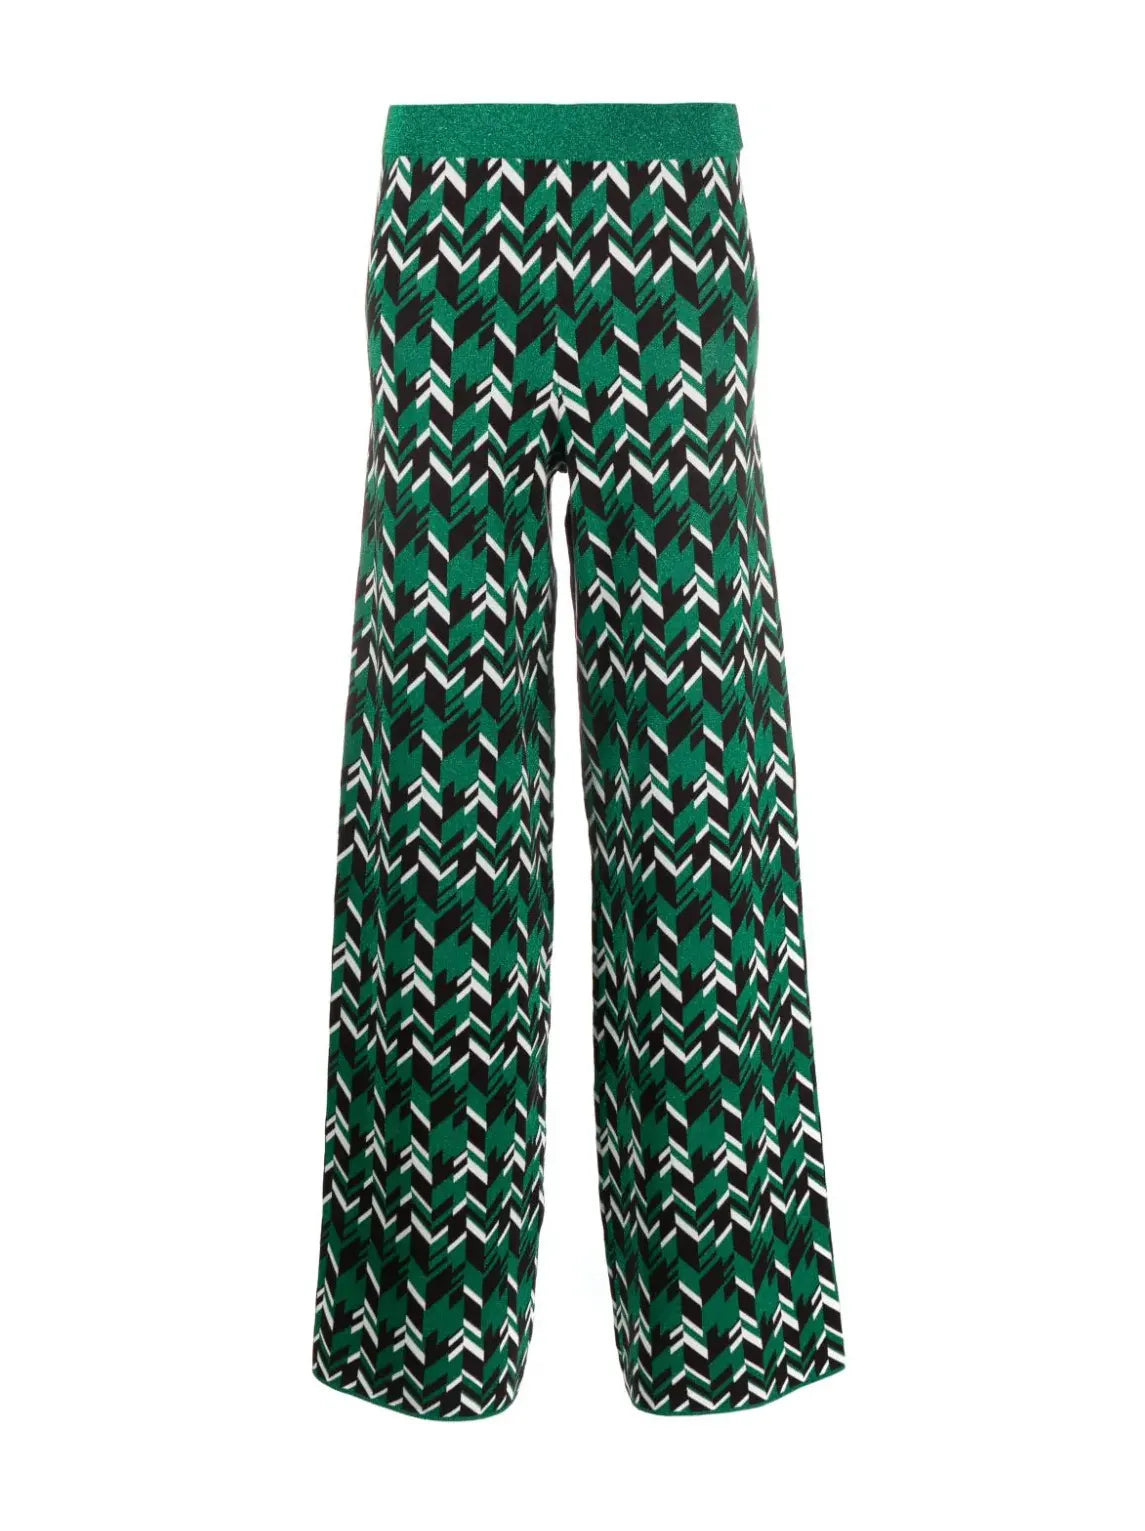 Cabery trousers, green geometric